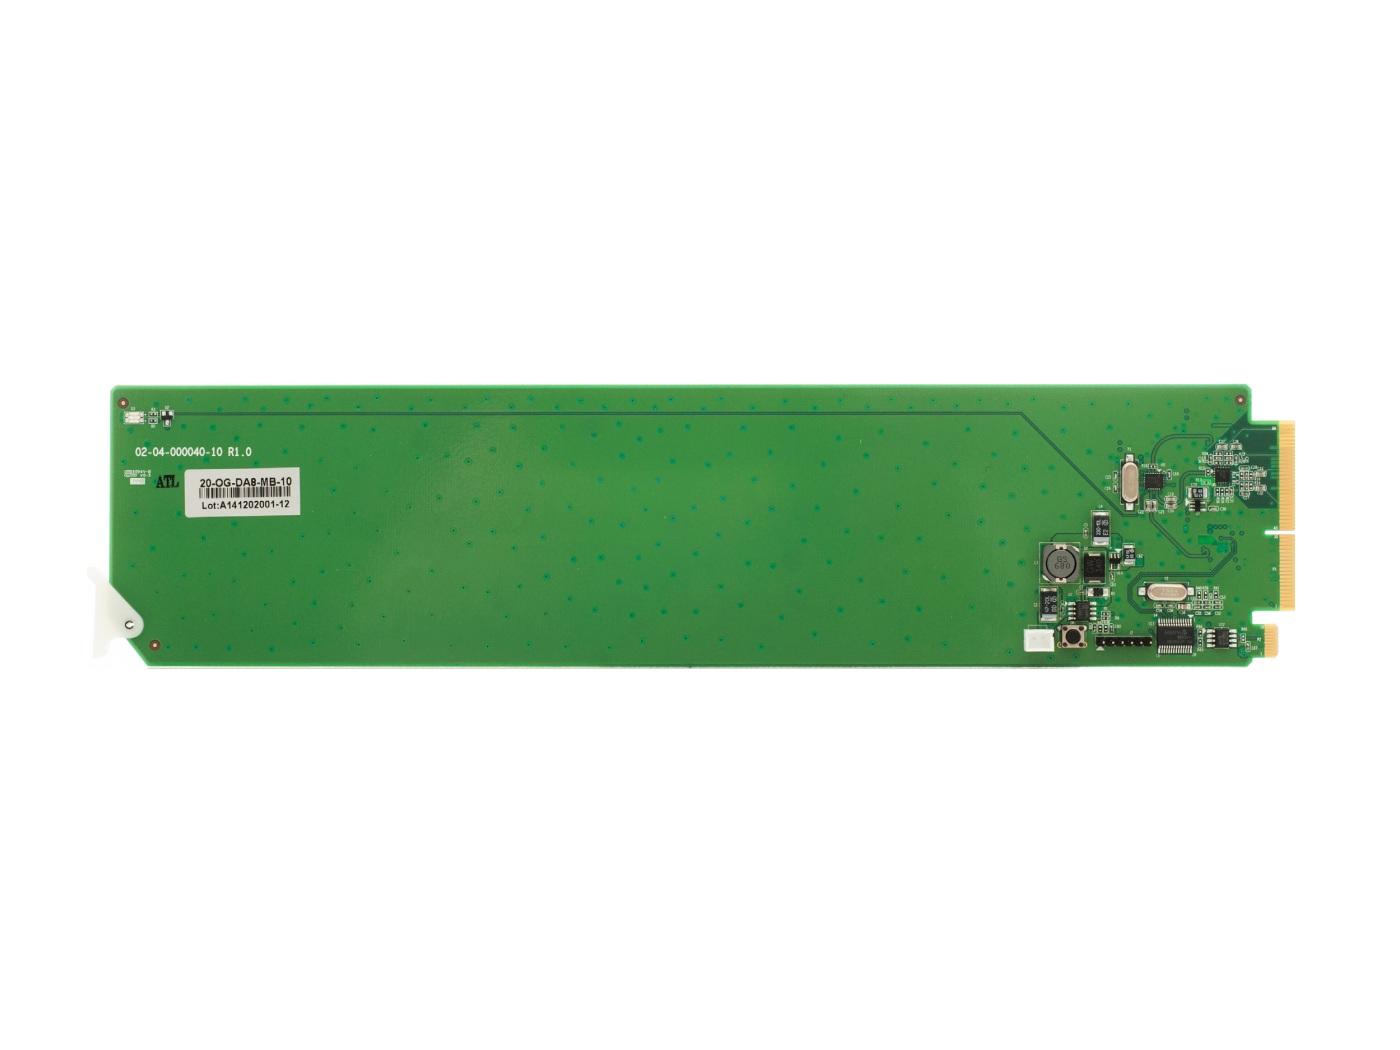 OG-DA-4HD-II-MB Stand Alone 1x4 Reclocking SDI Distribution Amplifier by Apantac